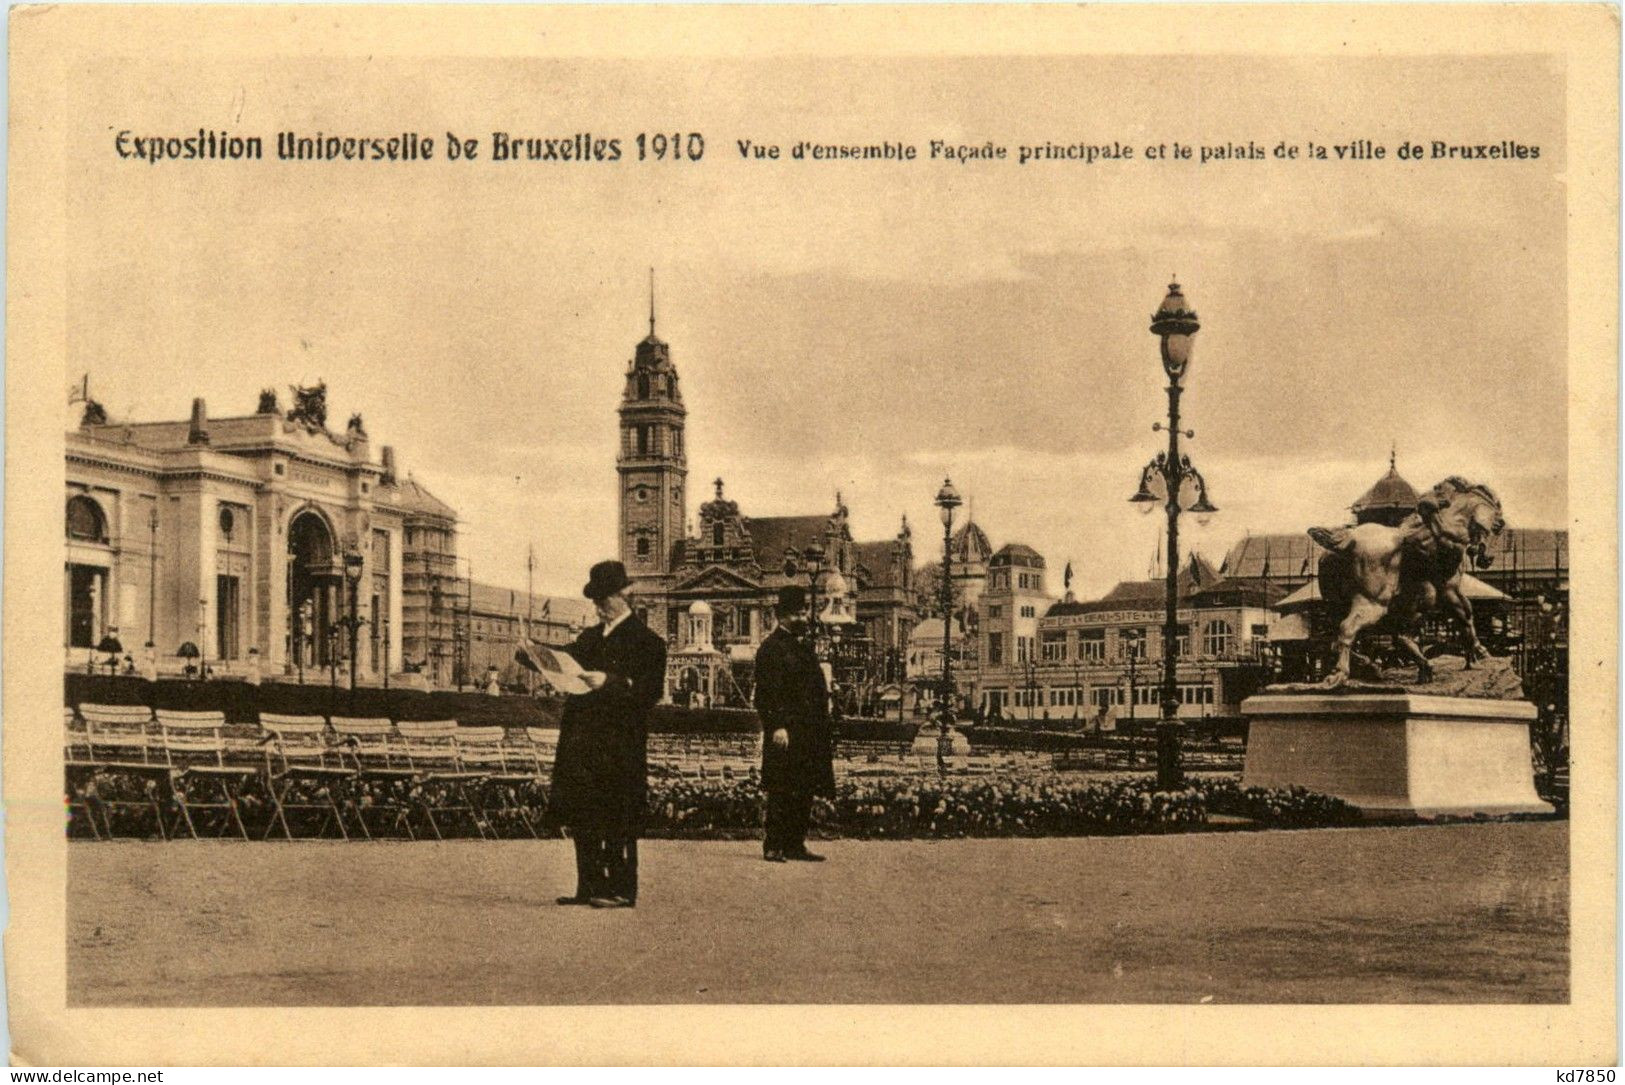 Expostition Universelle De Bruxelles 1910 - Exposiciones Universales